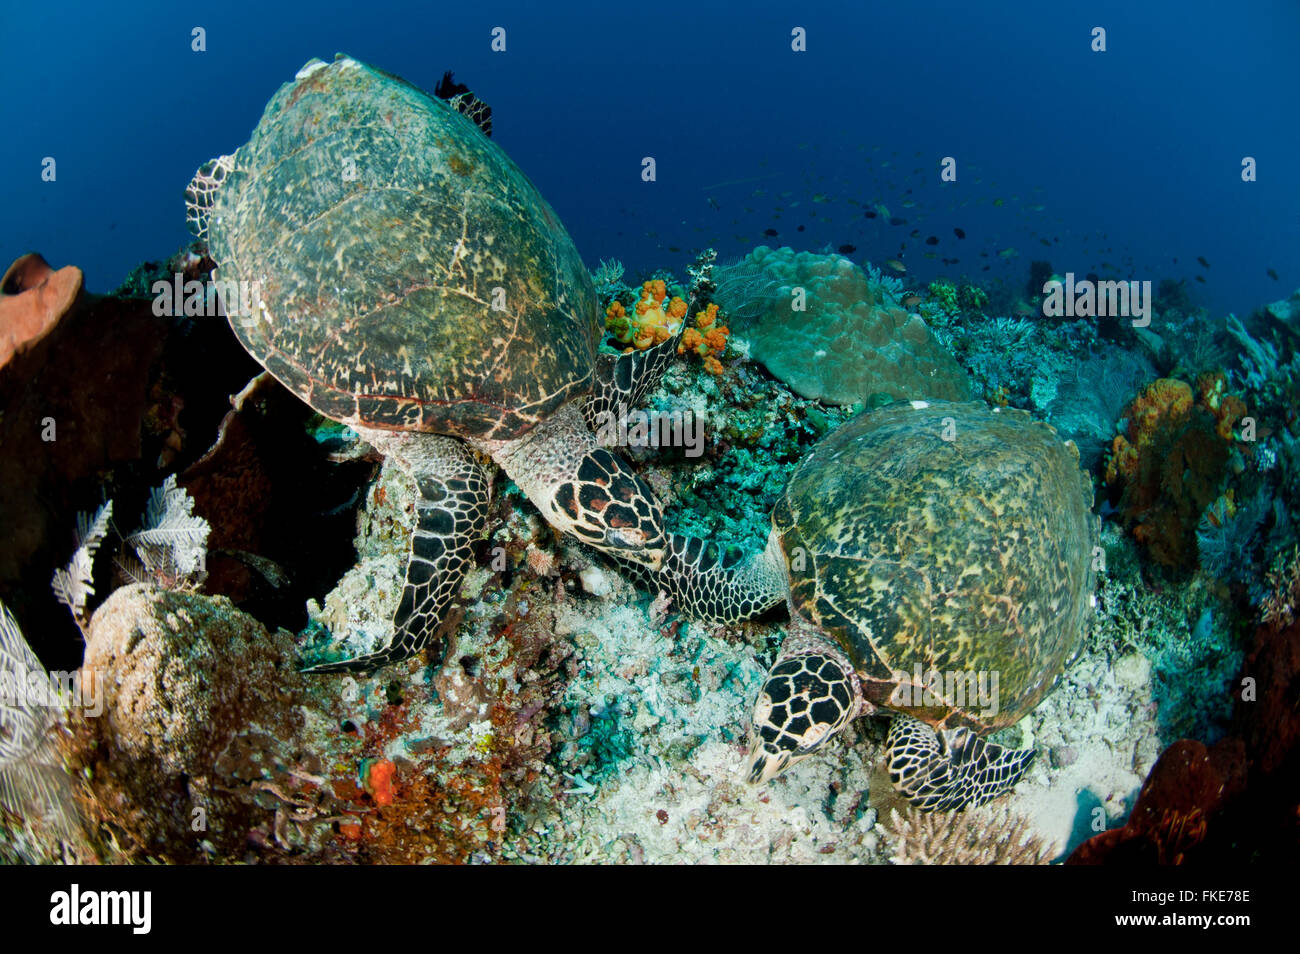 Hawksbill turtles (Eretmochelys imbricata) in the reef. Stock Photo